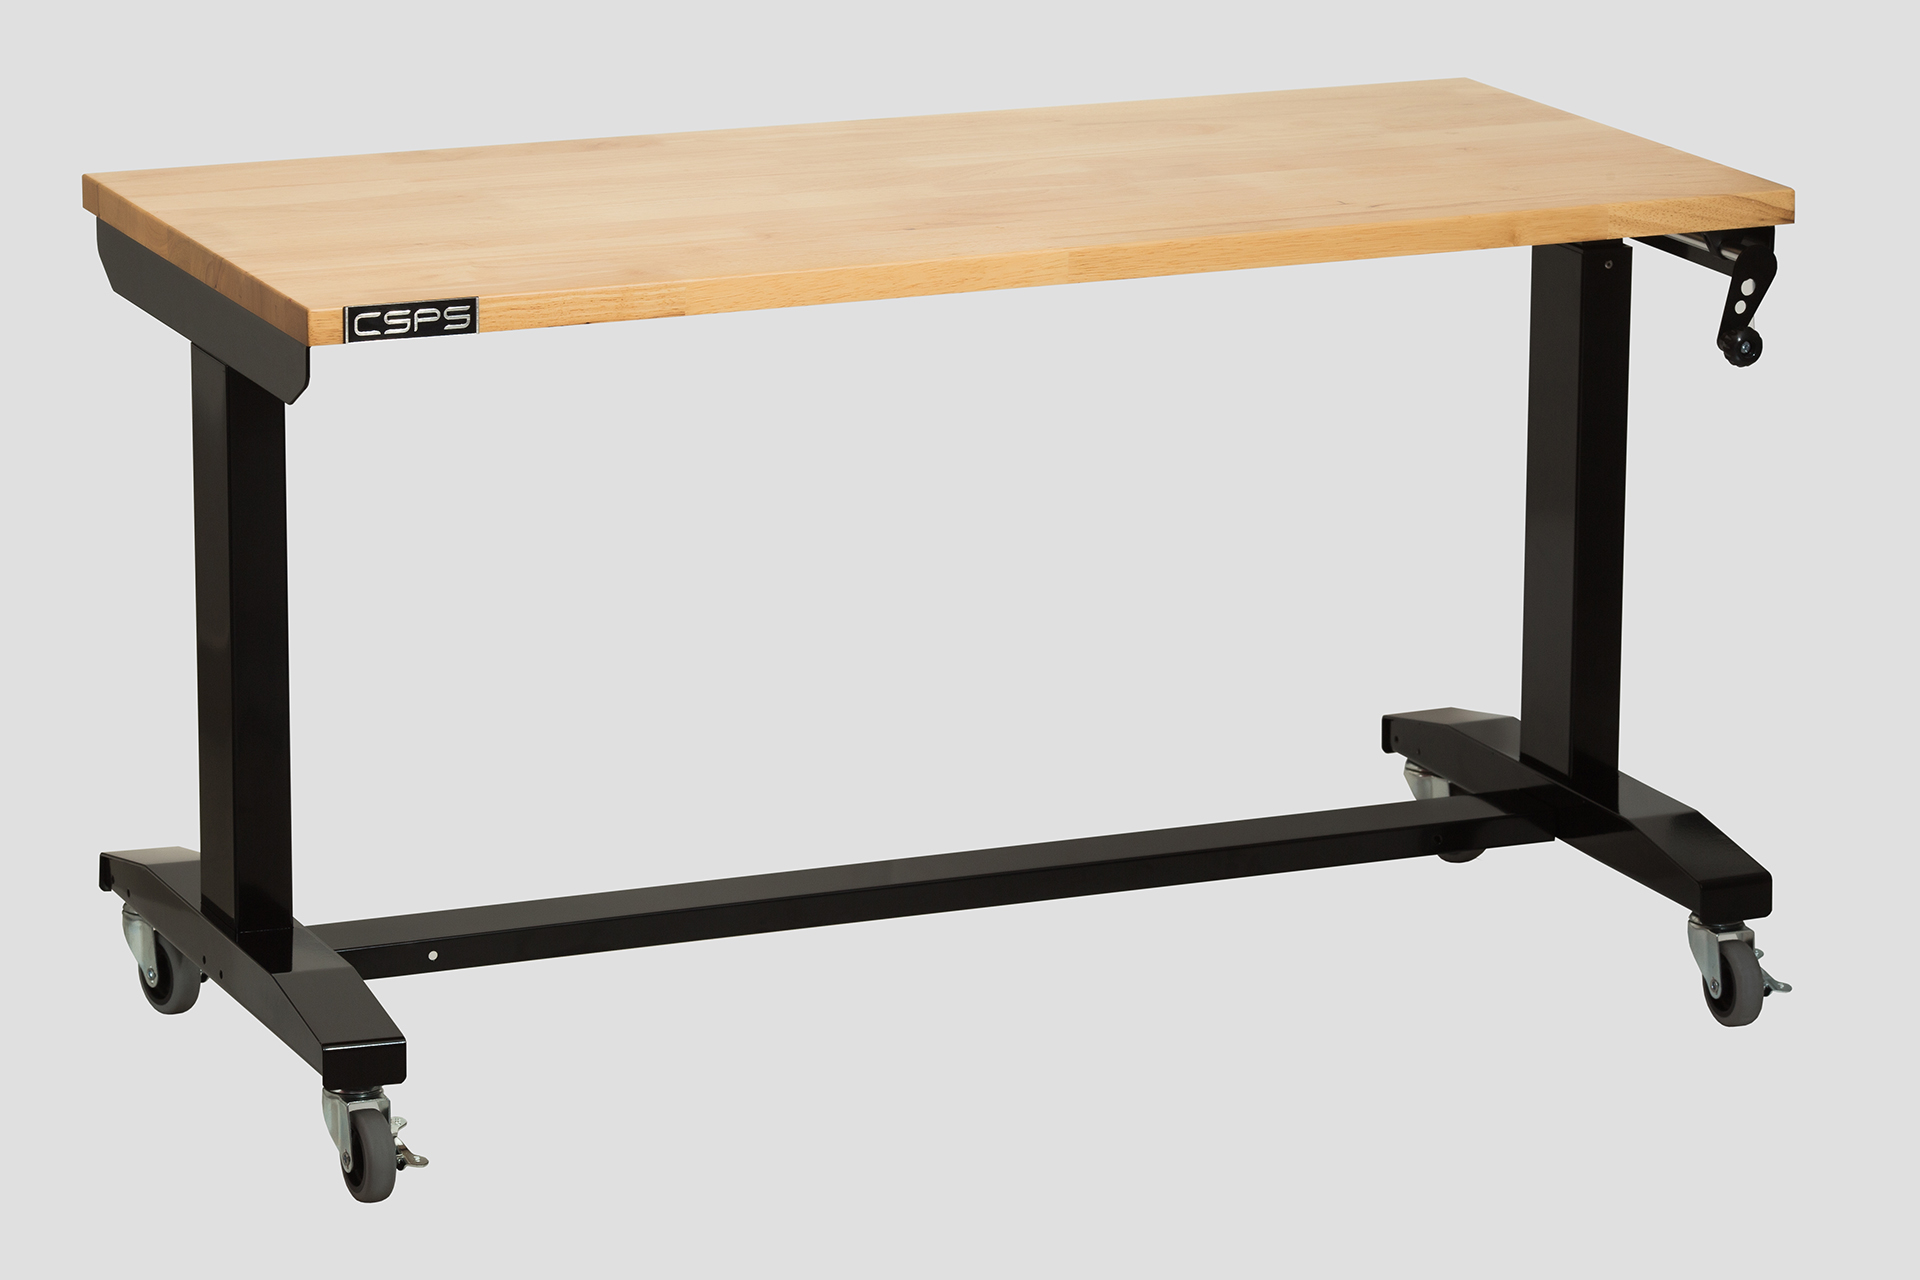 Adjustable table-CSPS CO., LTD.